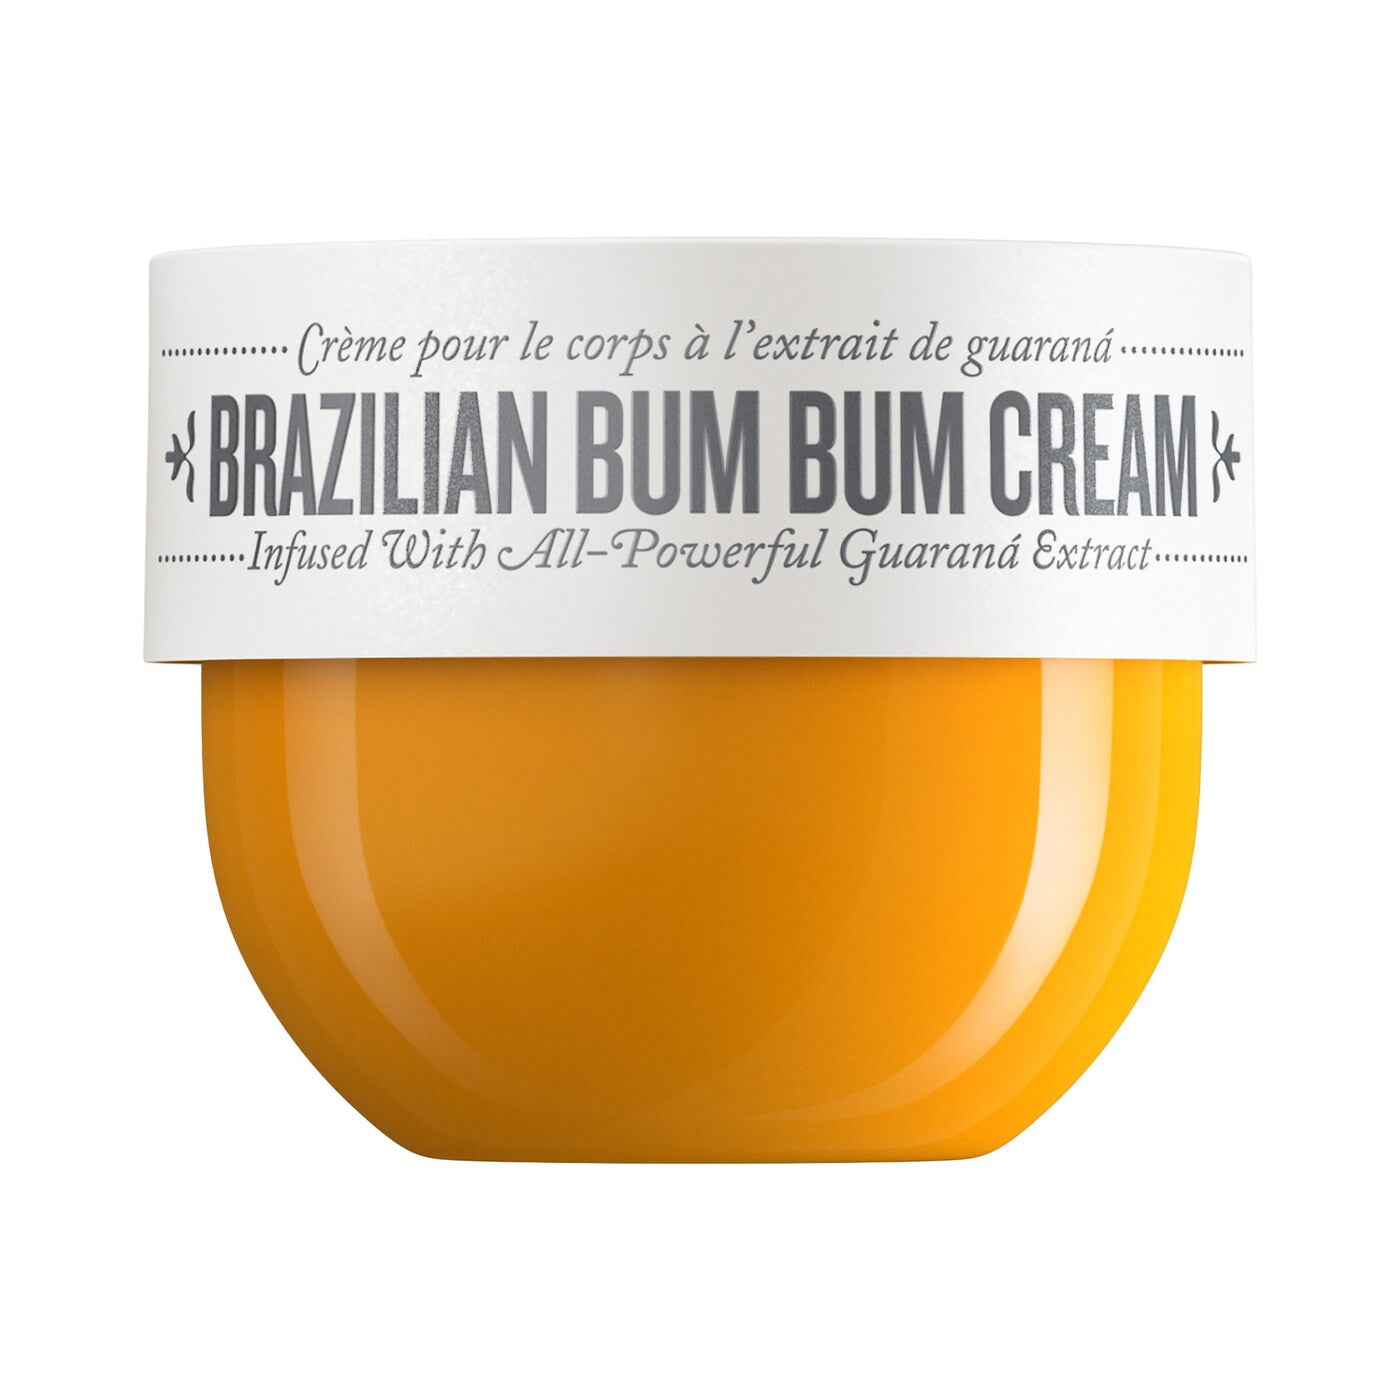 Brazilian Bum Bum Cream trial size